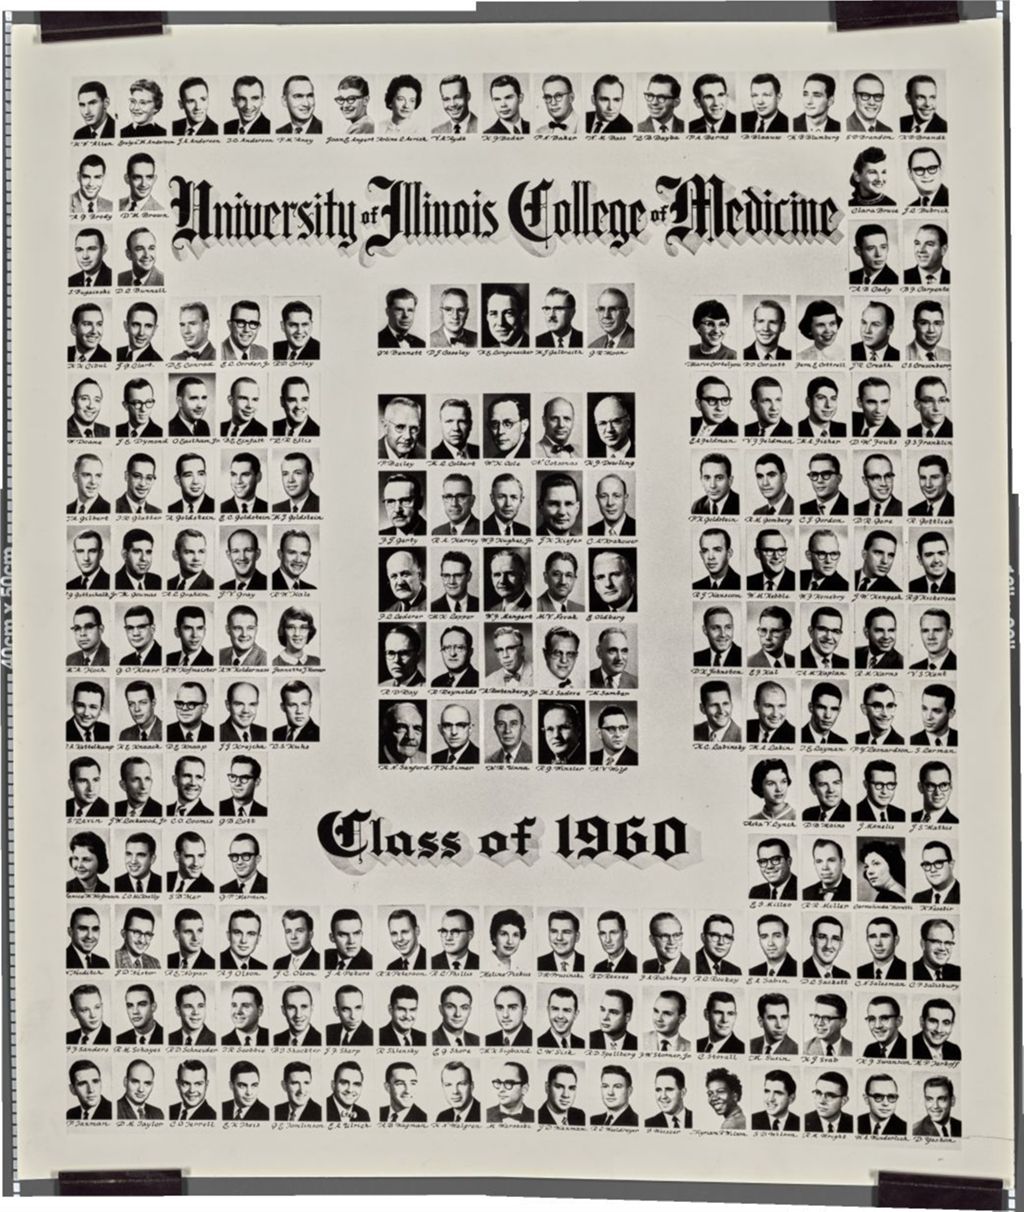 Miniature of 1960 graduating class, University of Illinois College of Medicine